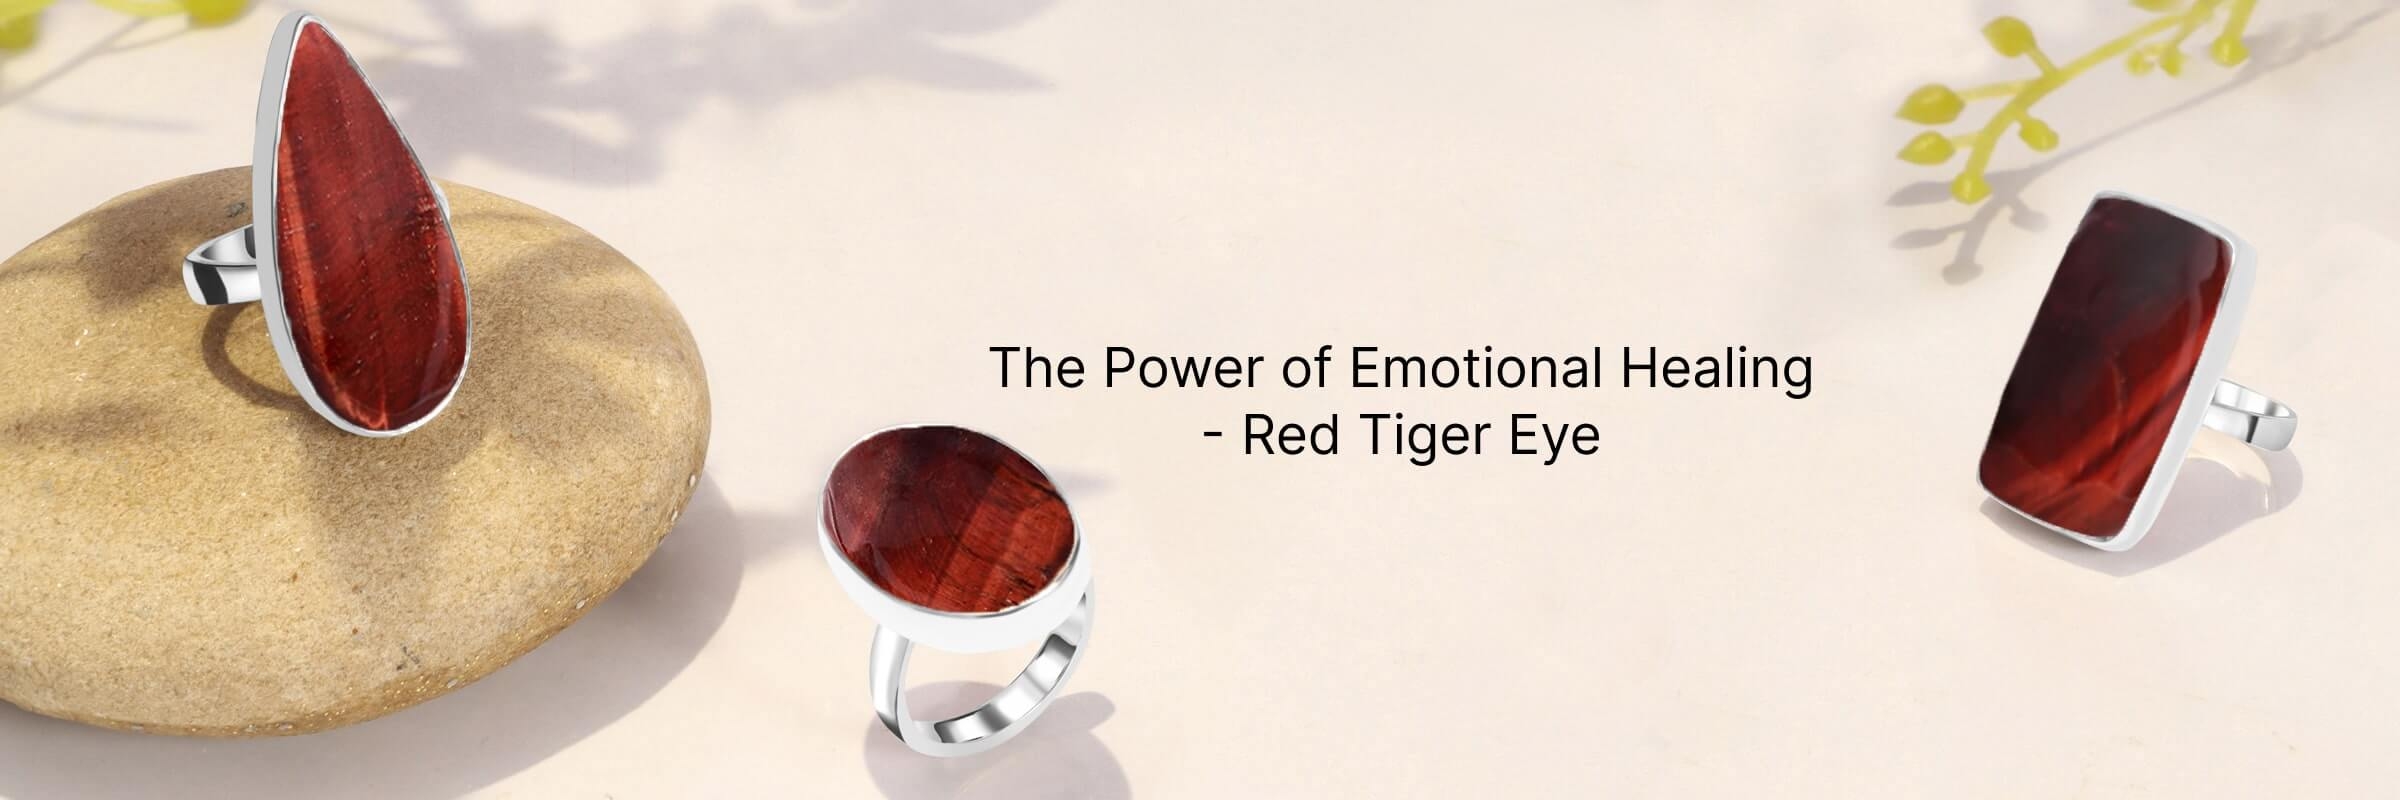 Red Tiger Eye Emotional and Mental Healing Properties